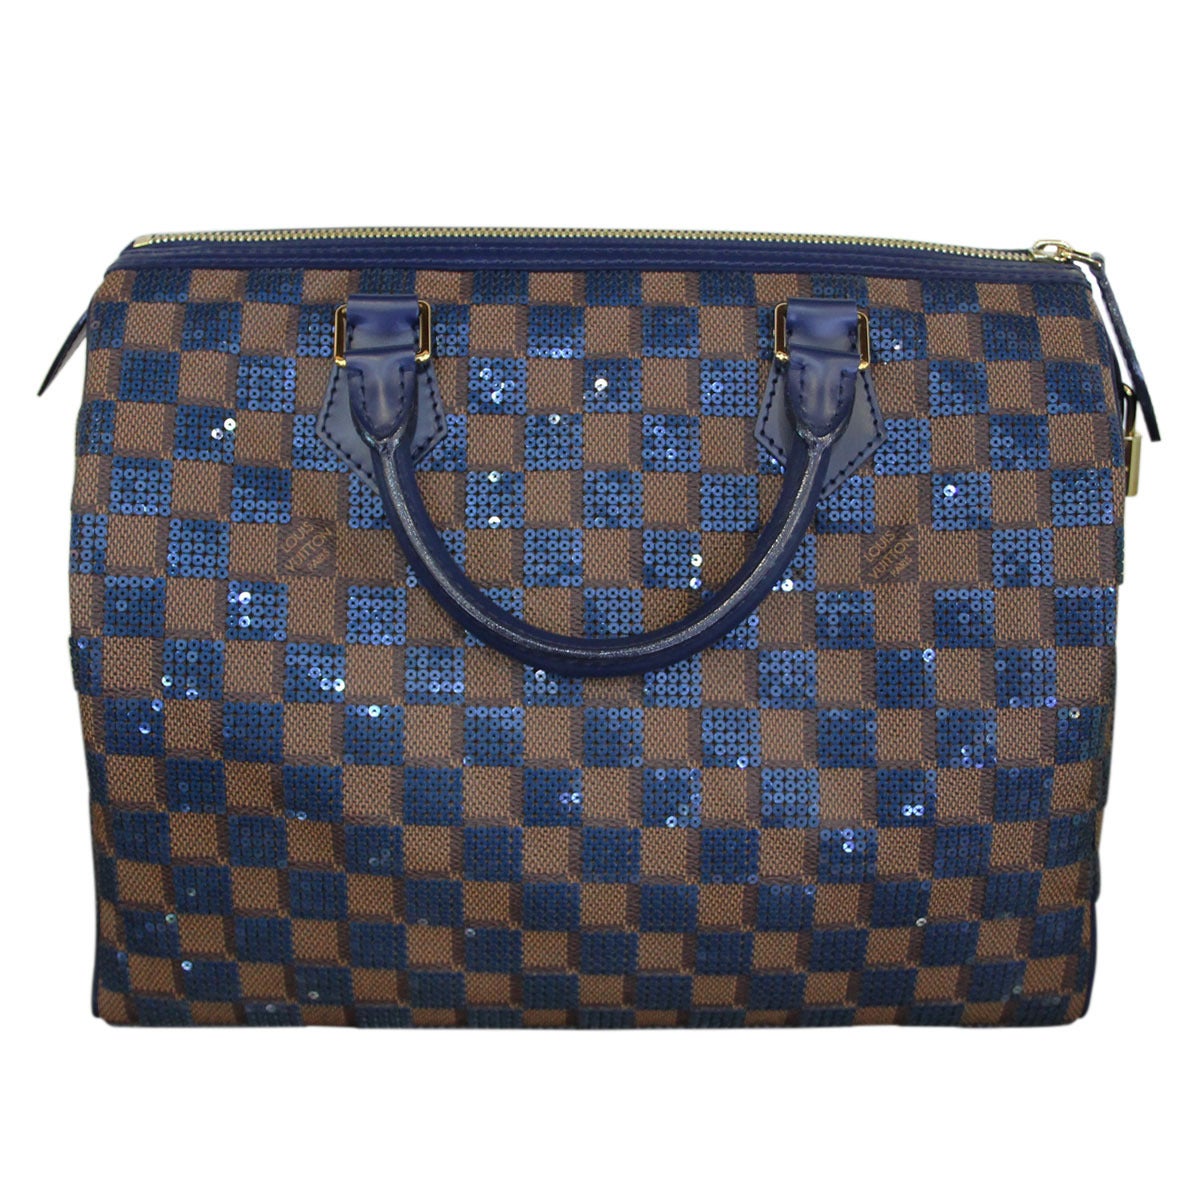 Brand: Louis Vuitton
Handles: Dark Blue Cowhide Leather Rolled Handles
Measurements: 12.25